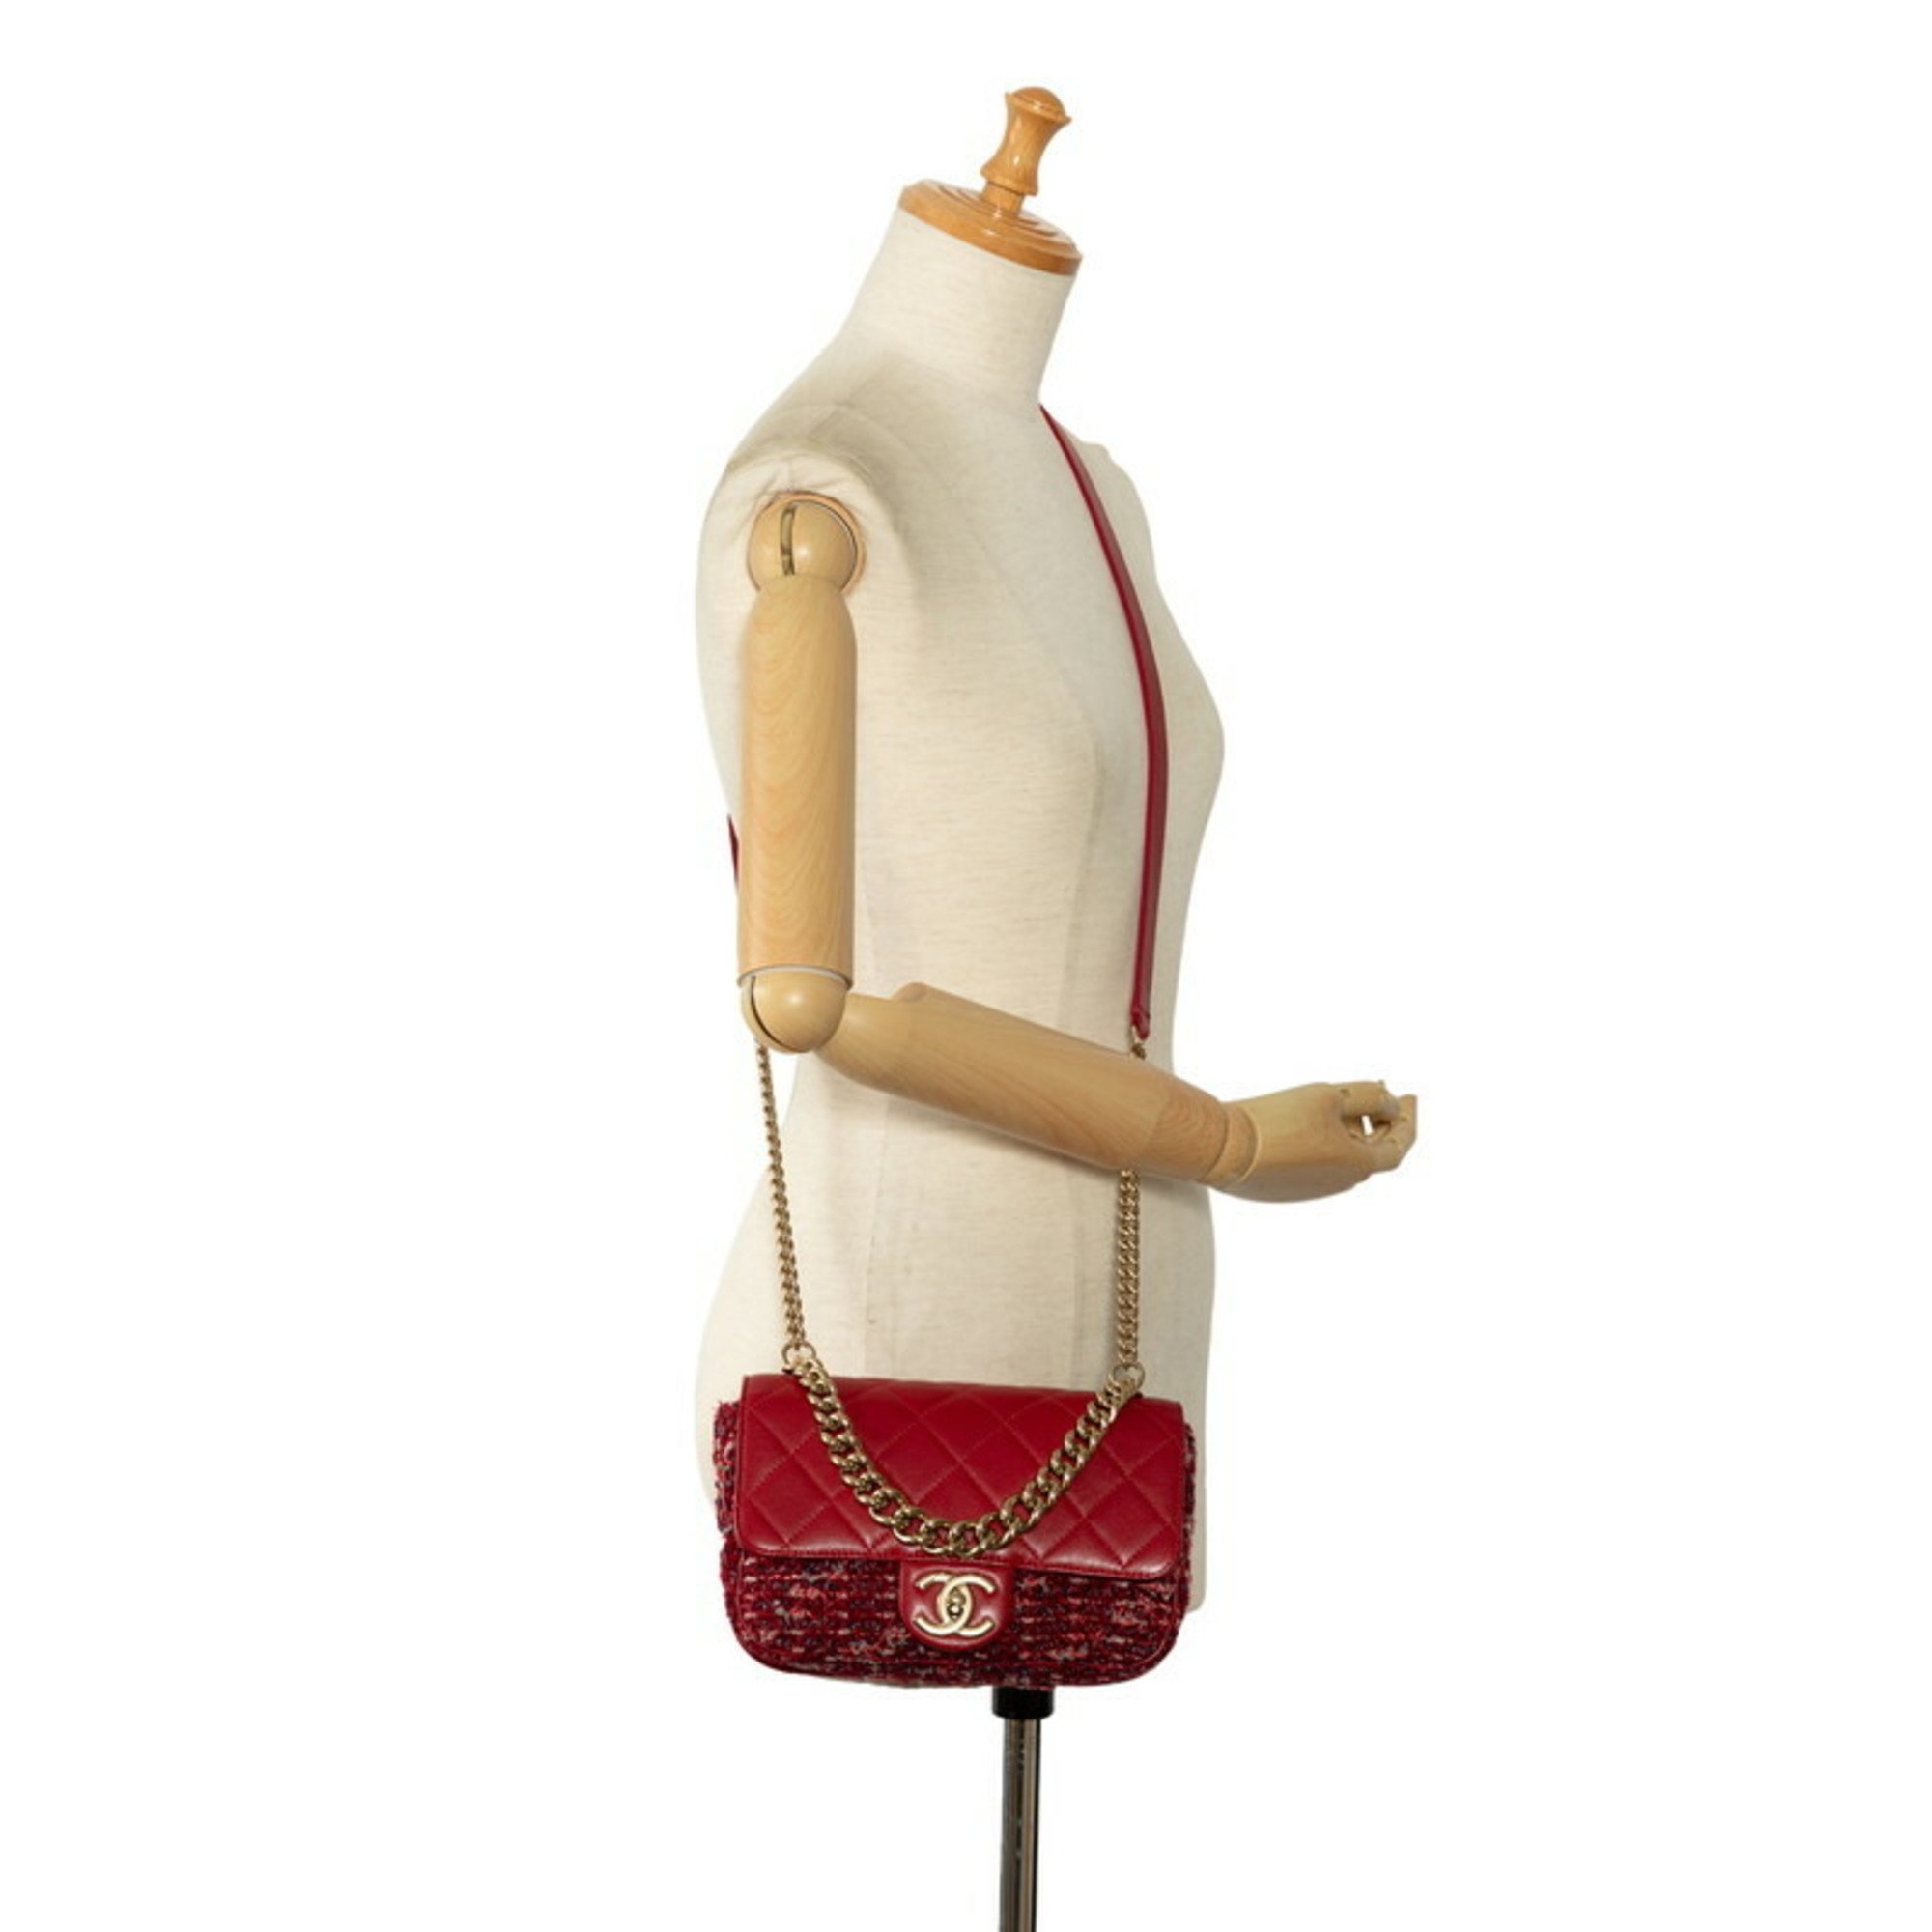 Chanel Matelasse Coco Mark Chain Shoulder Bag Handbag Red Multicolor Leather Tweed Women's CHANEL